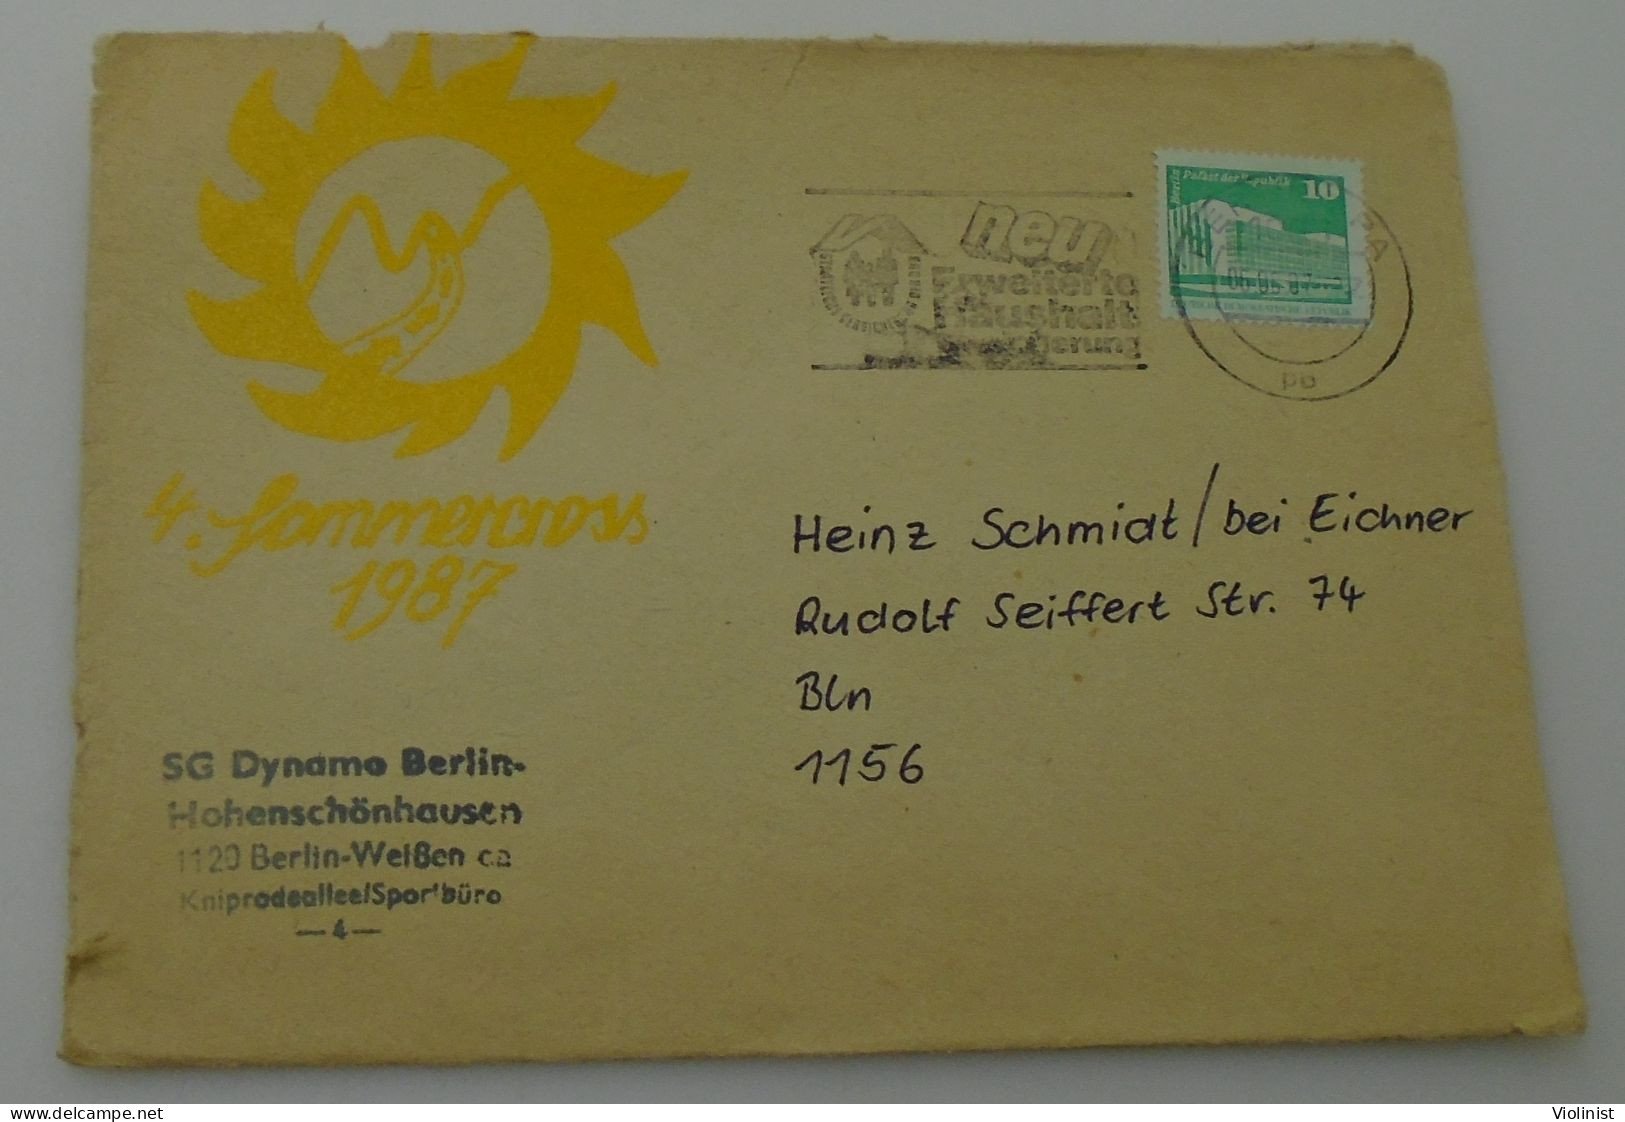 Germany-SG Dynamo Berlin-4.Sommercross 1987. - Privatumschläge - Gebraucht